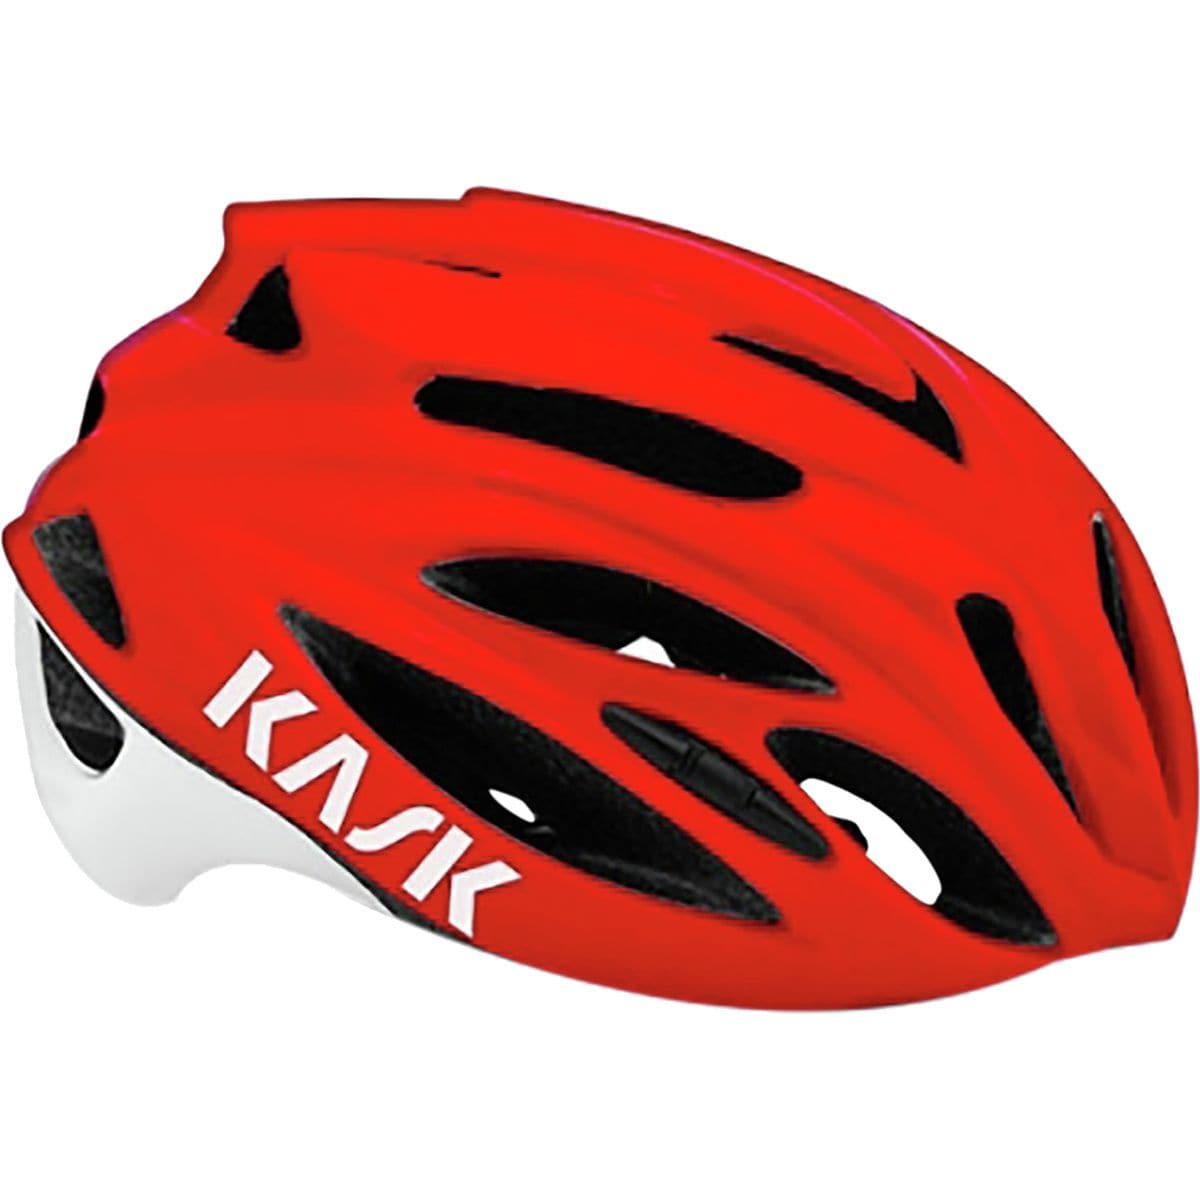 Red KASK Kask Rapido Road Cycling Helmet 